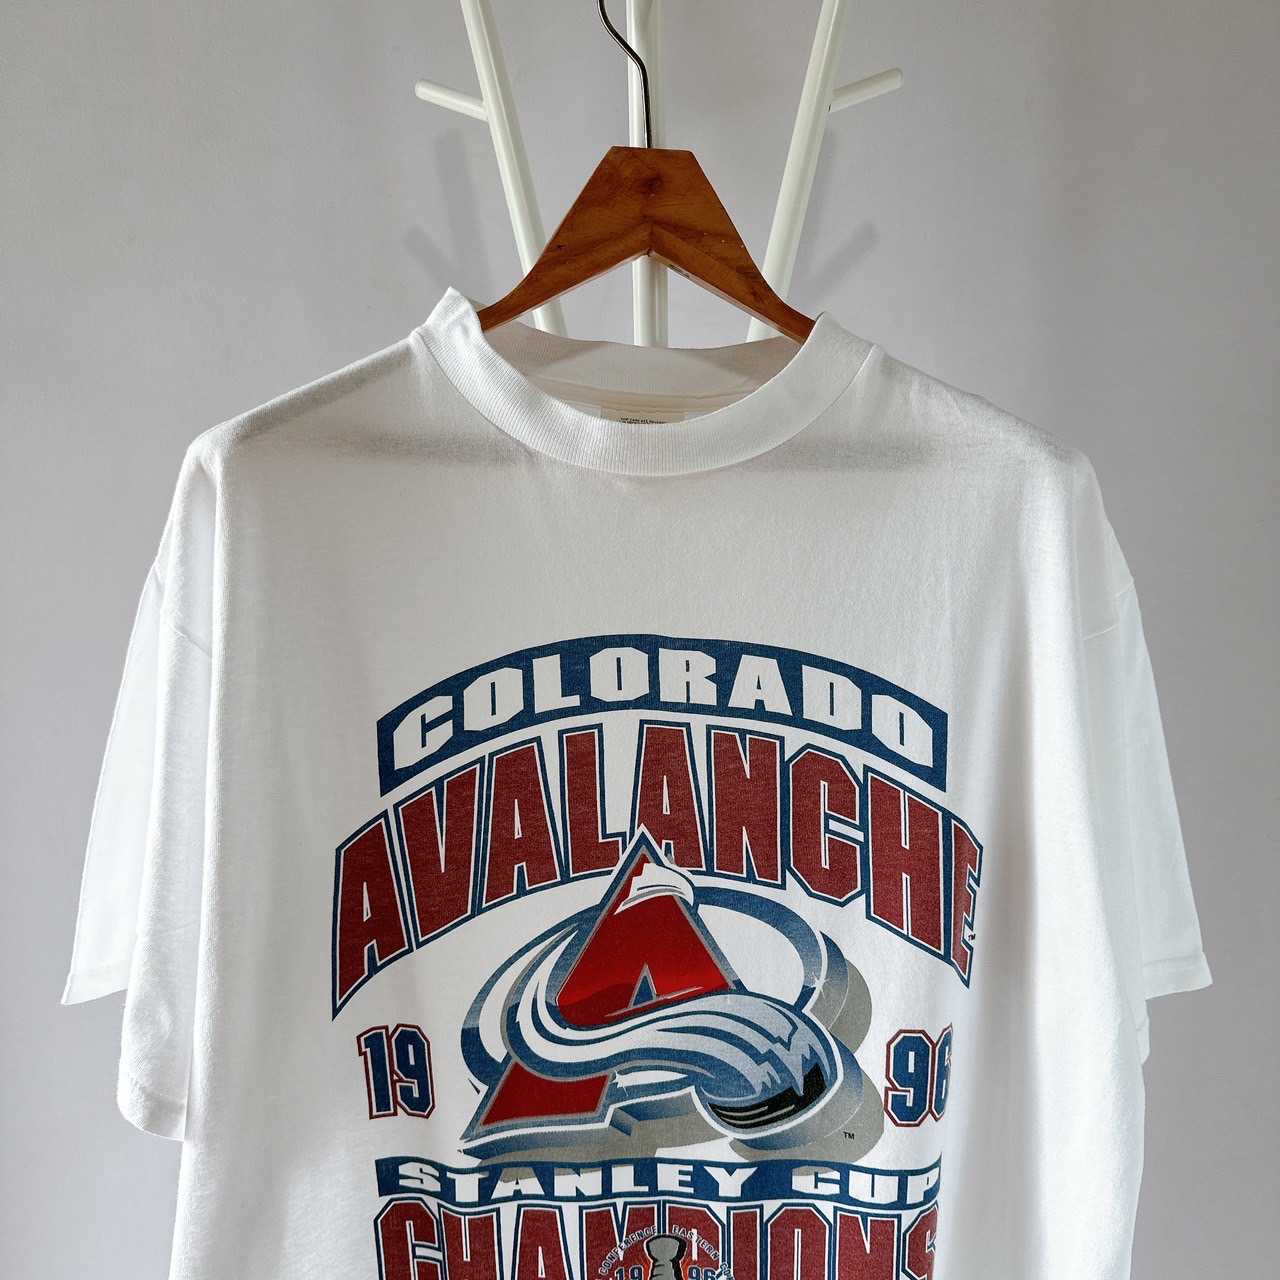 Colorado Avalanche Mens Apparel, Mens Avalanche Clothing